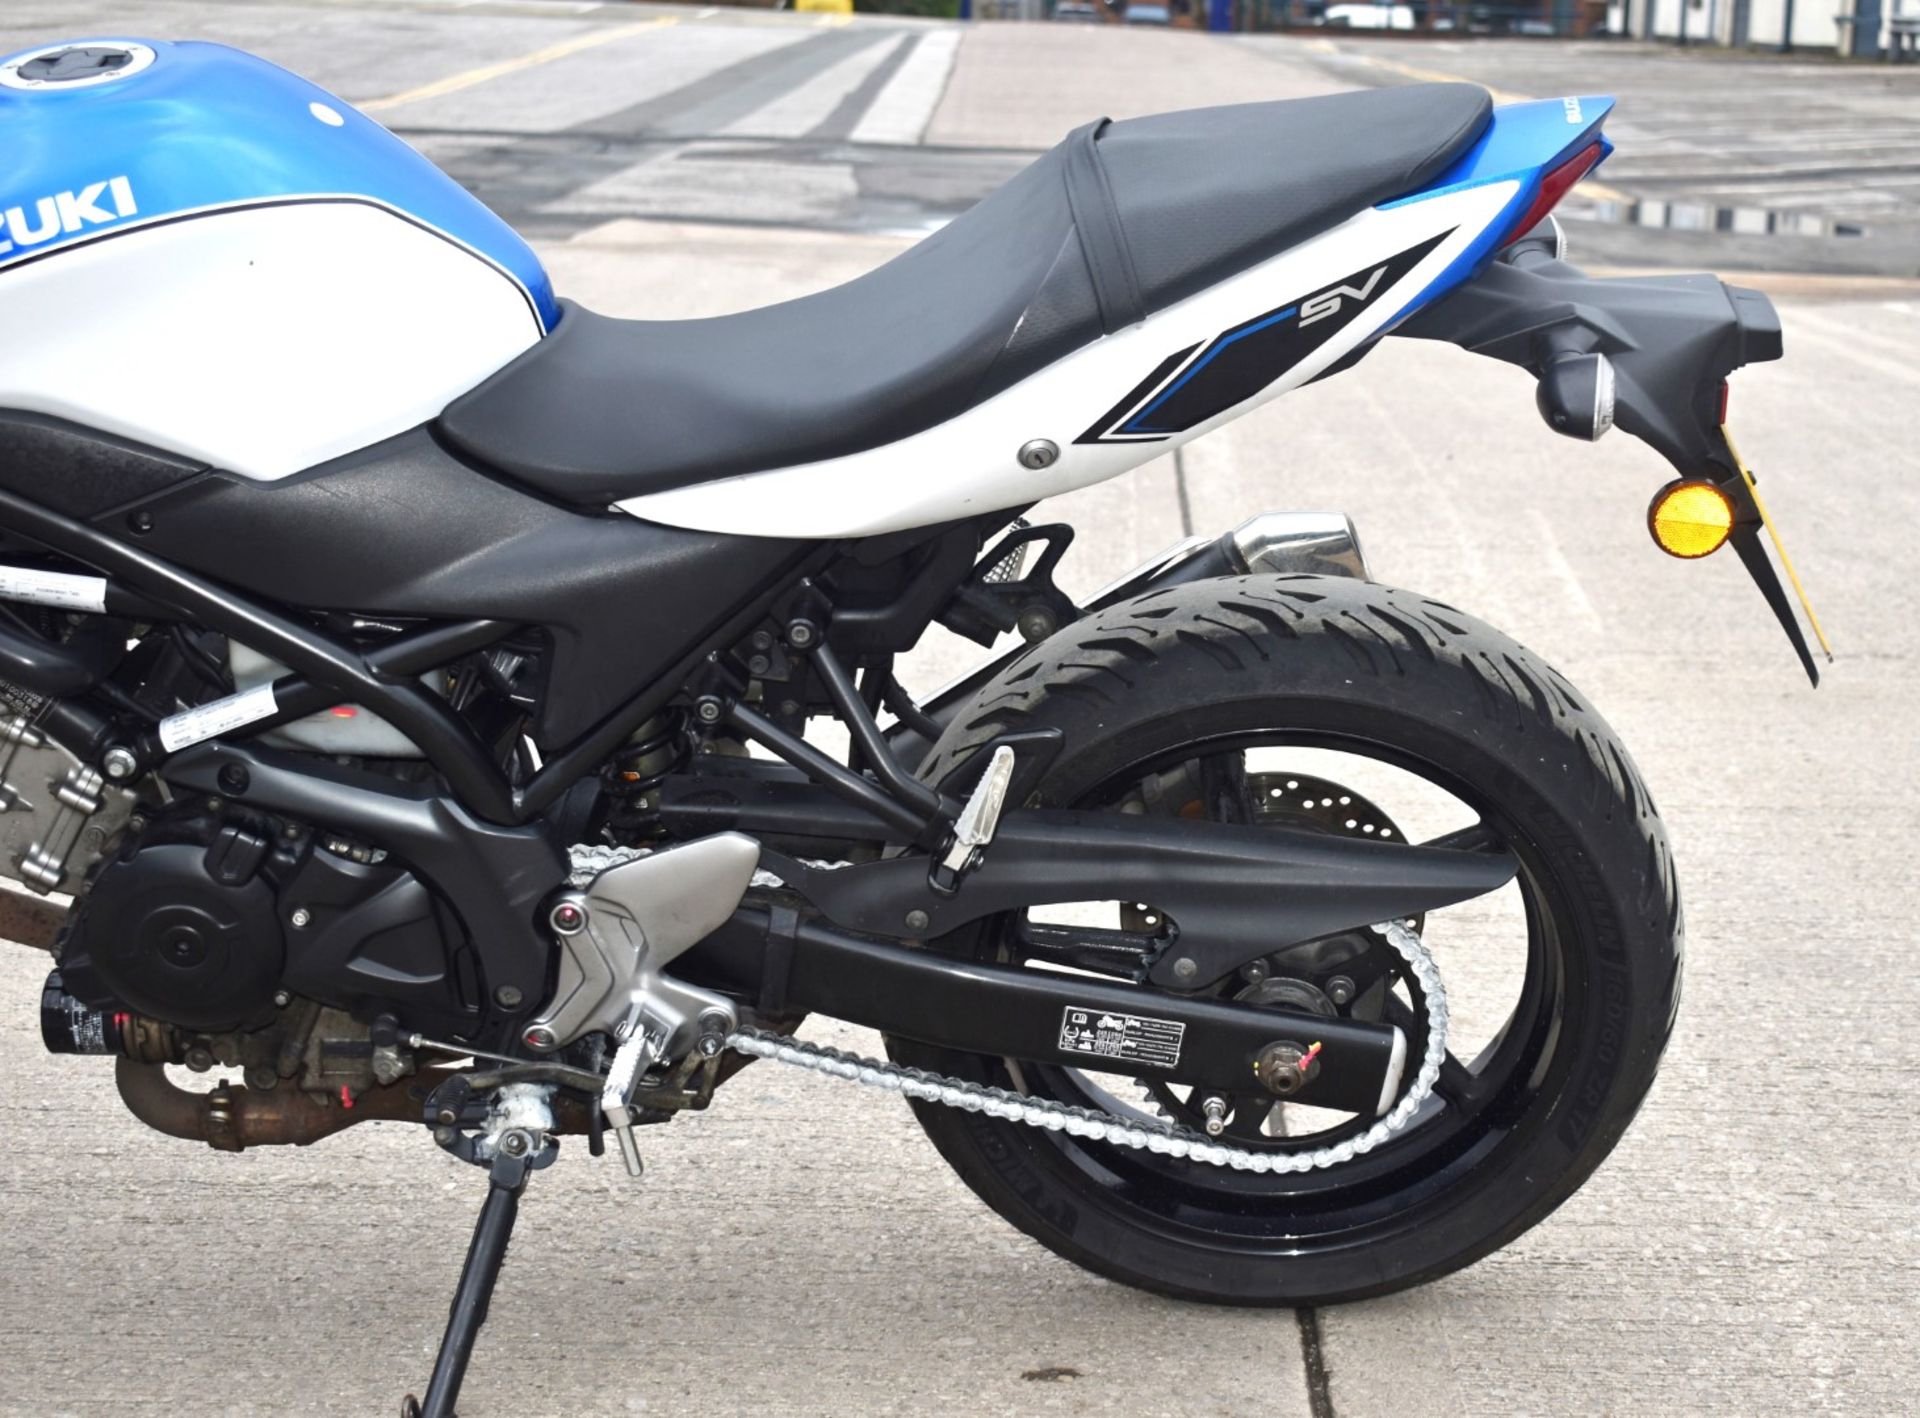 2018 Suzuki SV650 Motorcycle - BA18 UFV - Mileage: 18,188 - Image 9 of 25